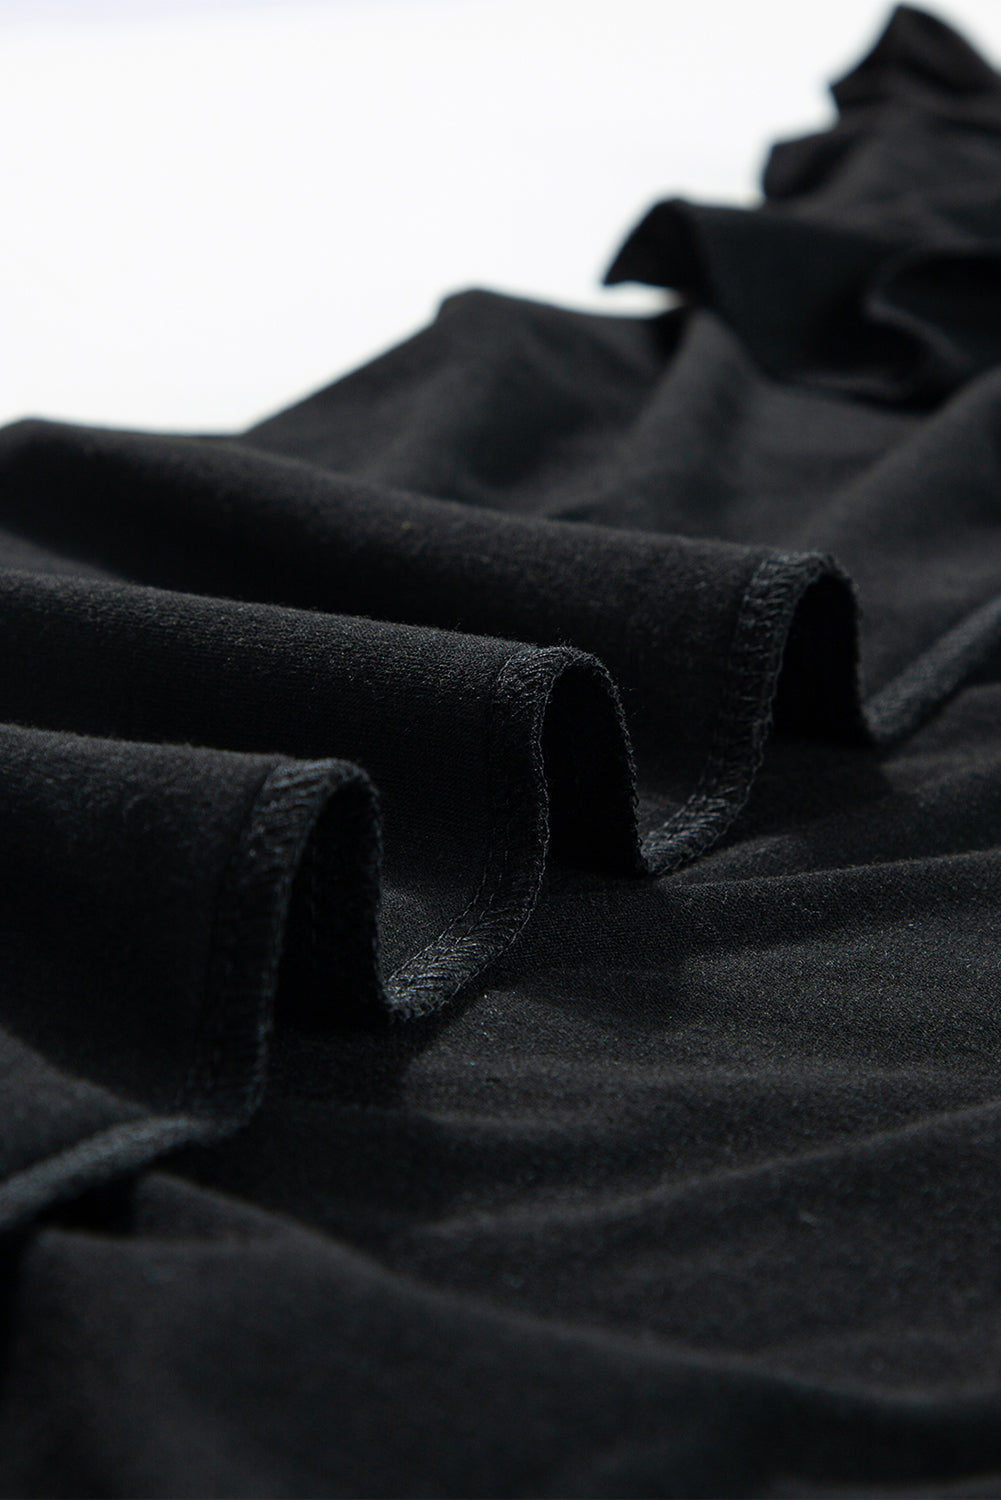 Crni kombinezon širokih nogavica s podesivim čvorovima na naramenice